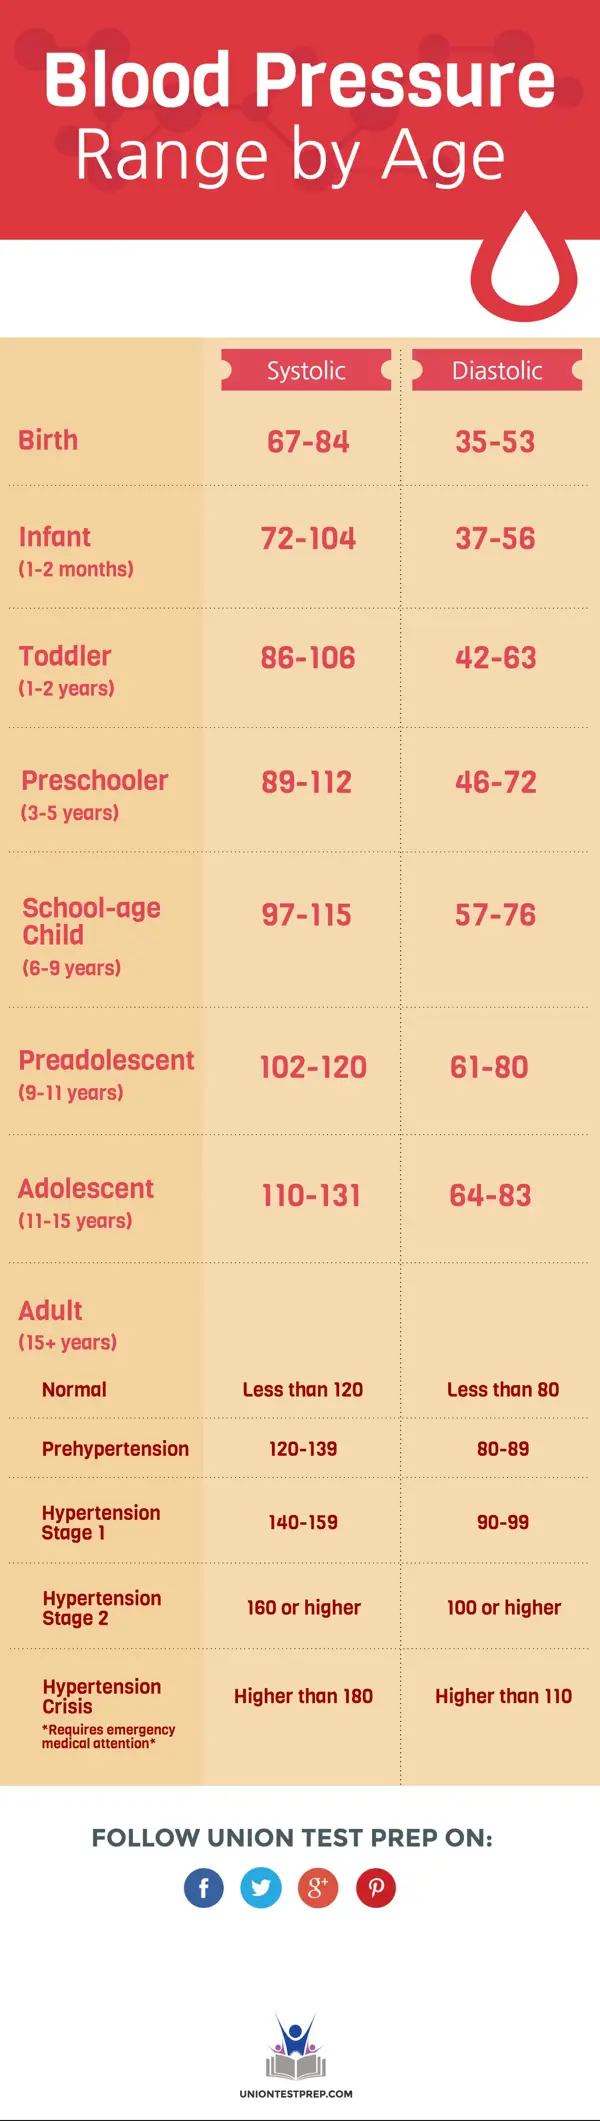 Blood Pressure Normal Range by Age